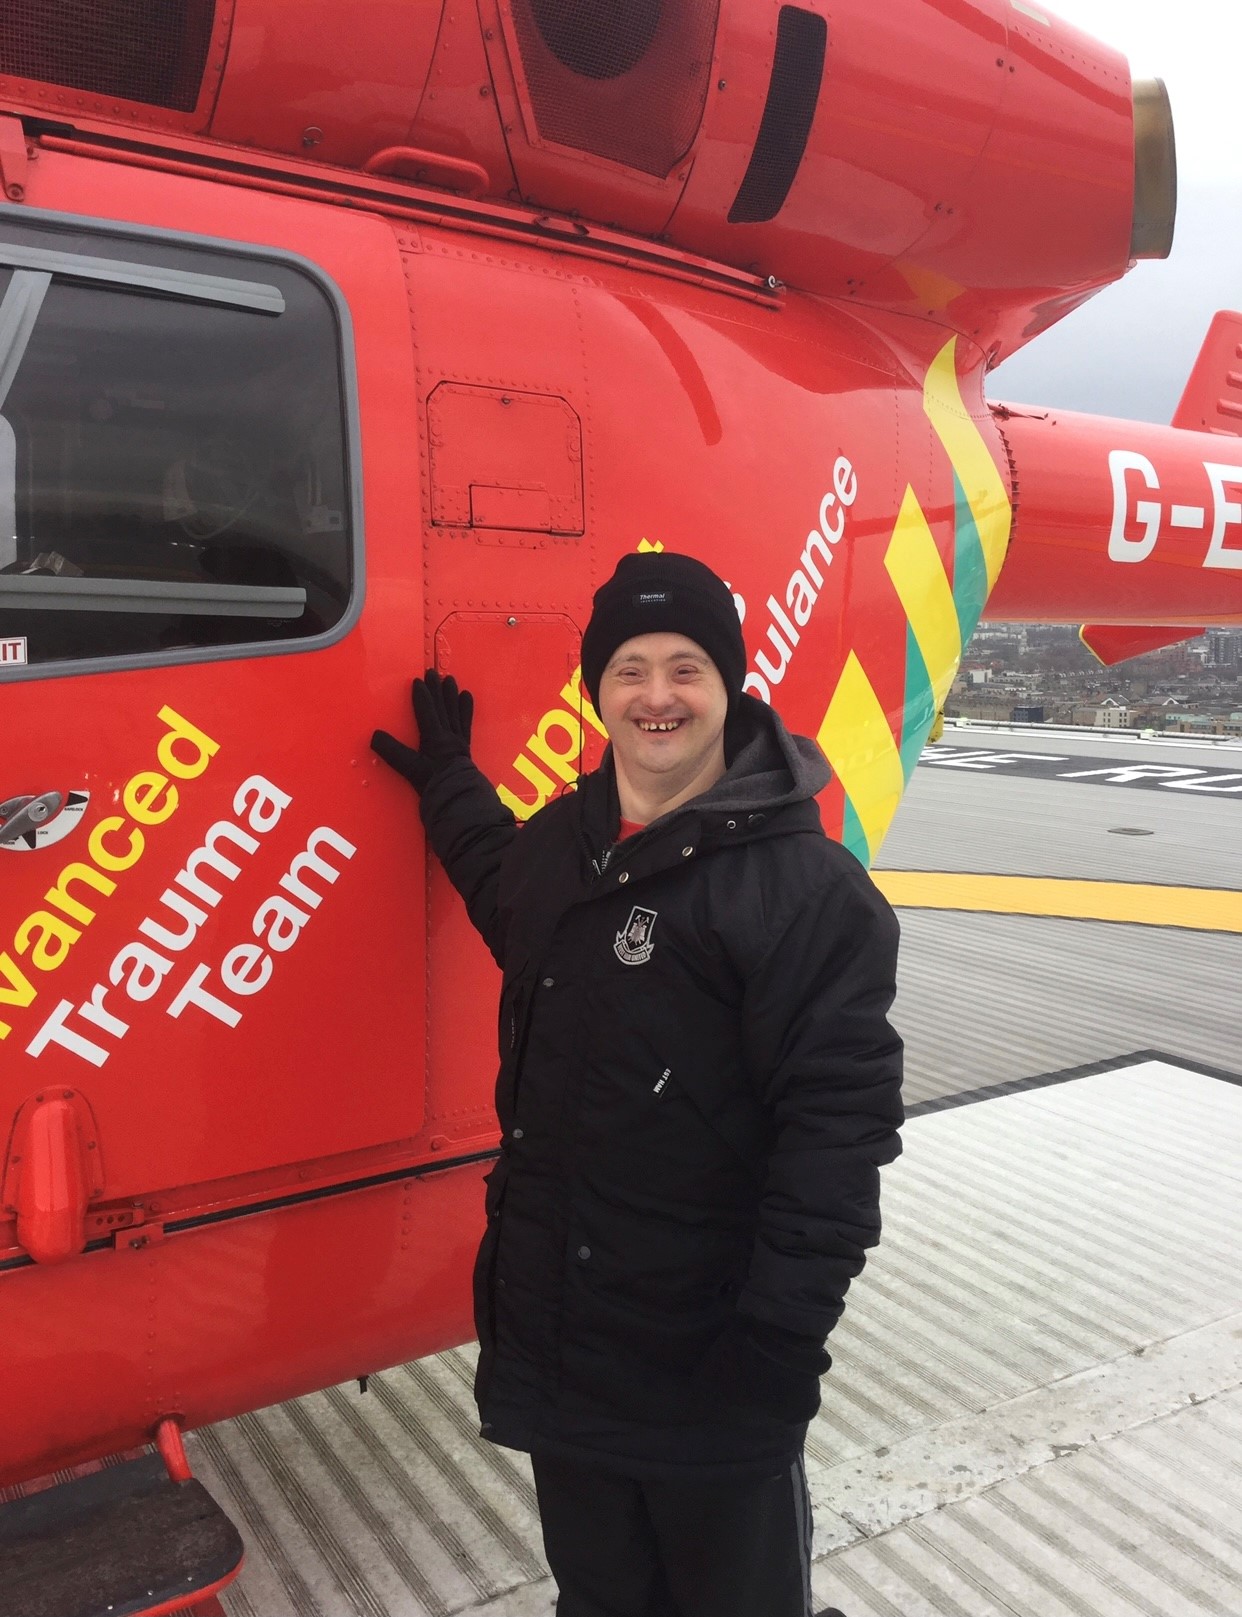 Daniel on the helipad with London's Air Ambulance